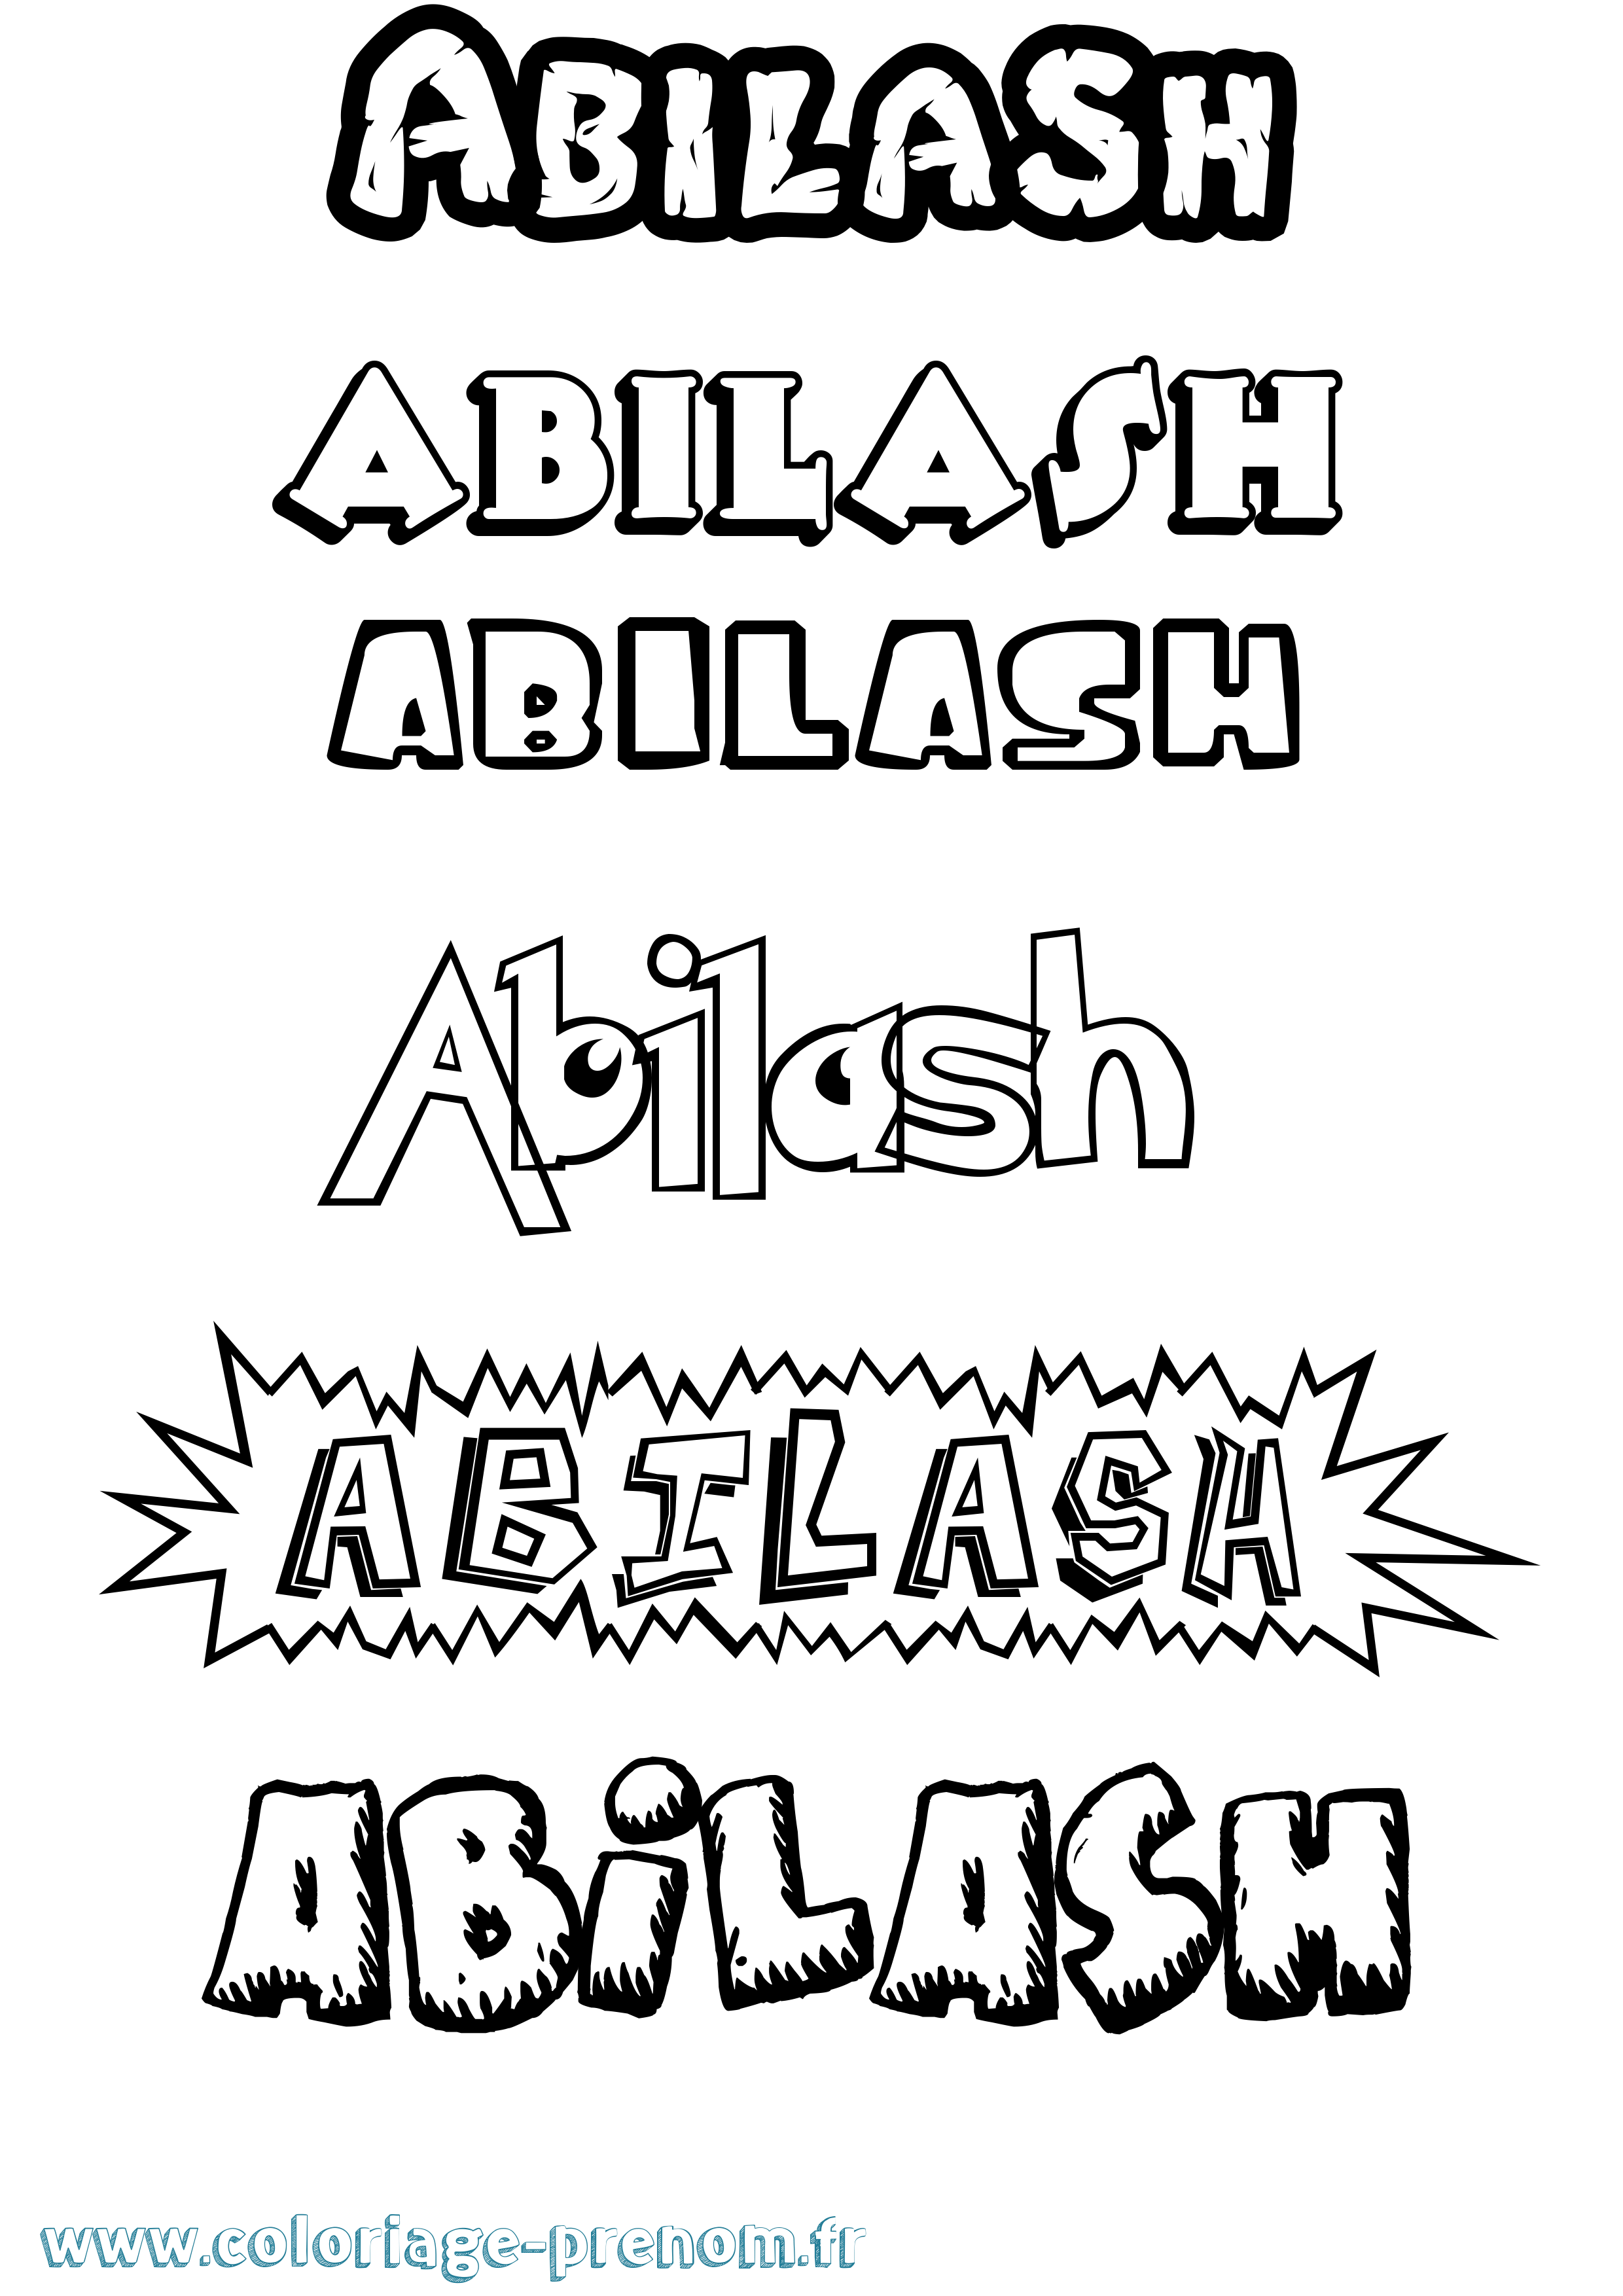 Coloriage prénom Abilash